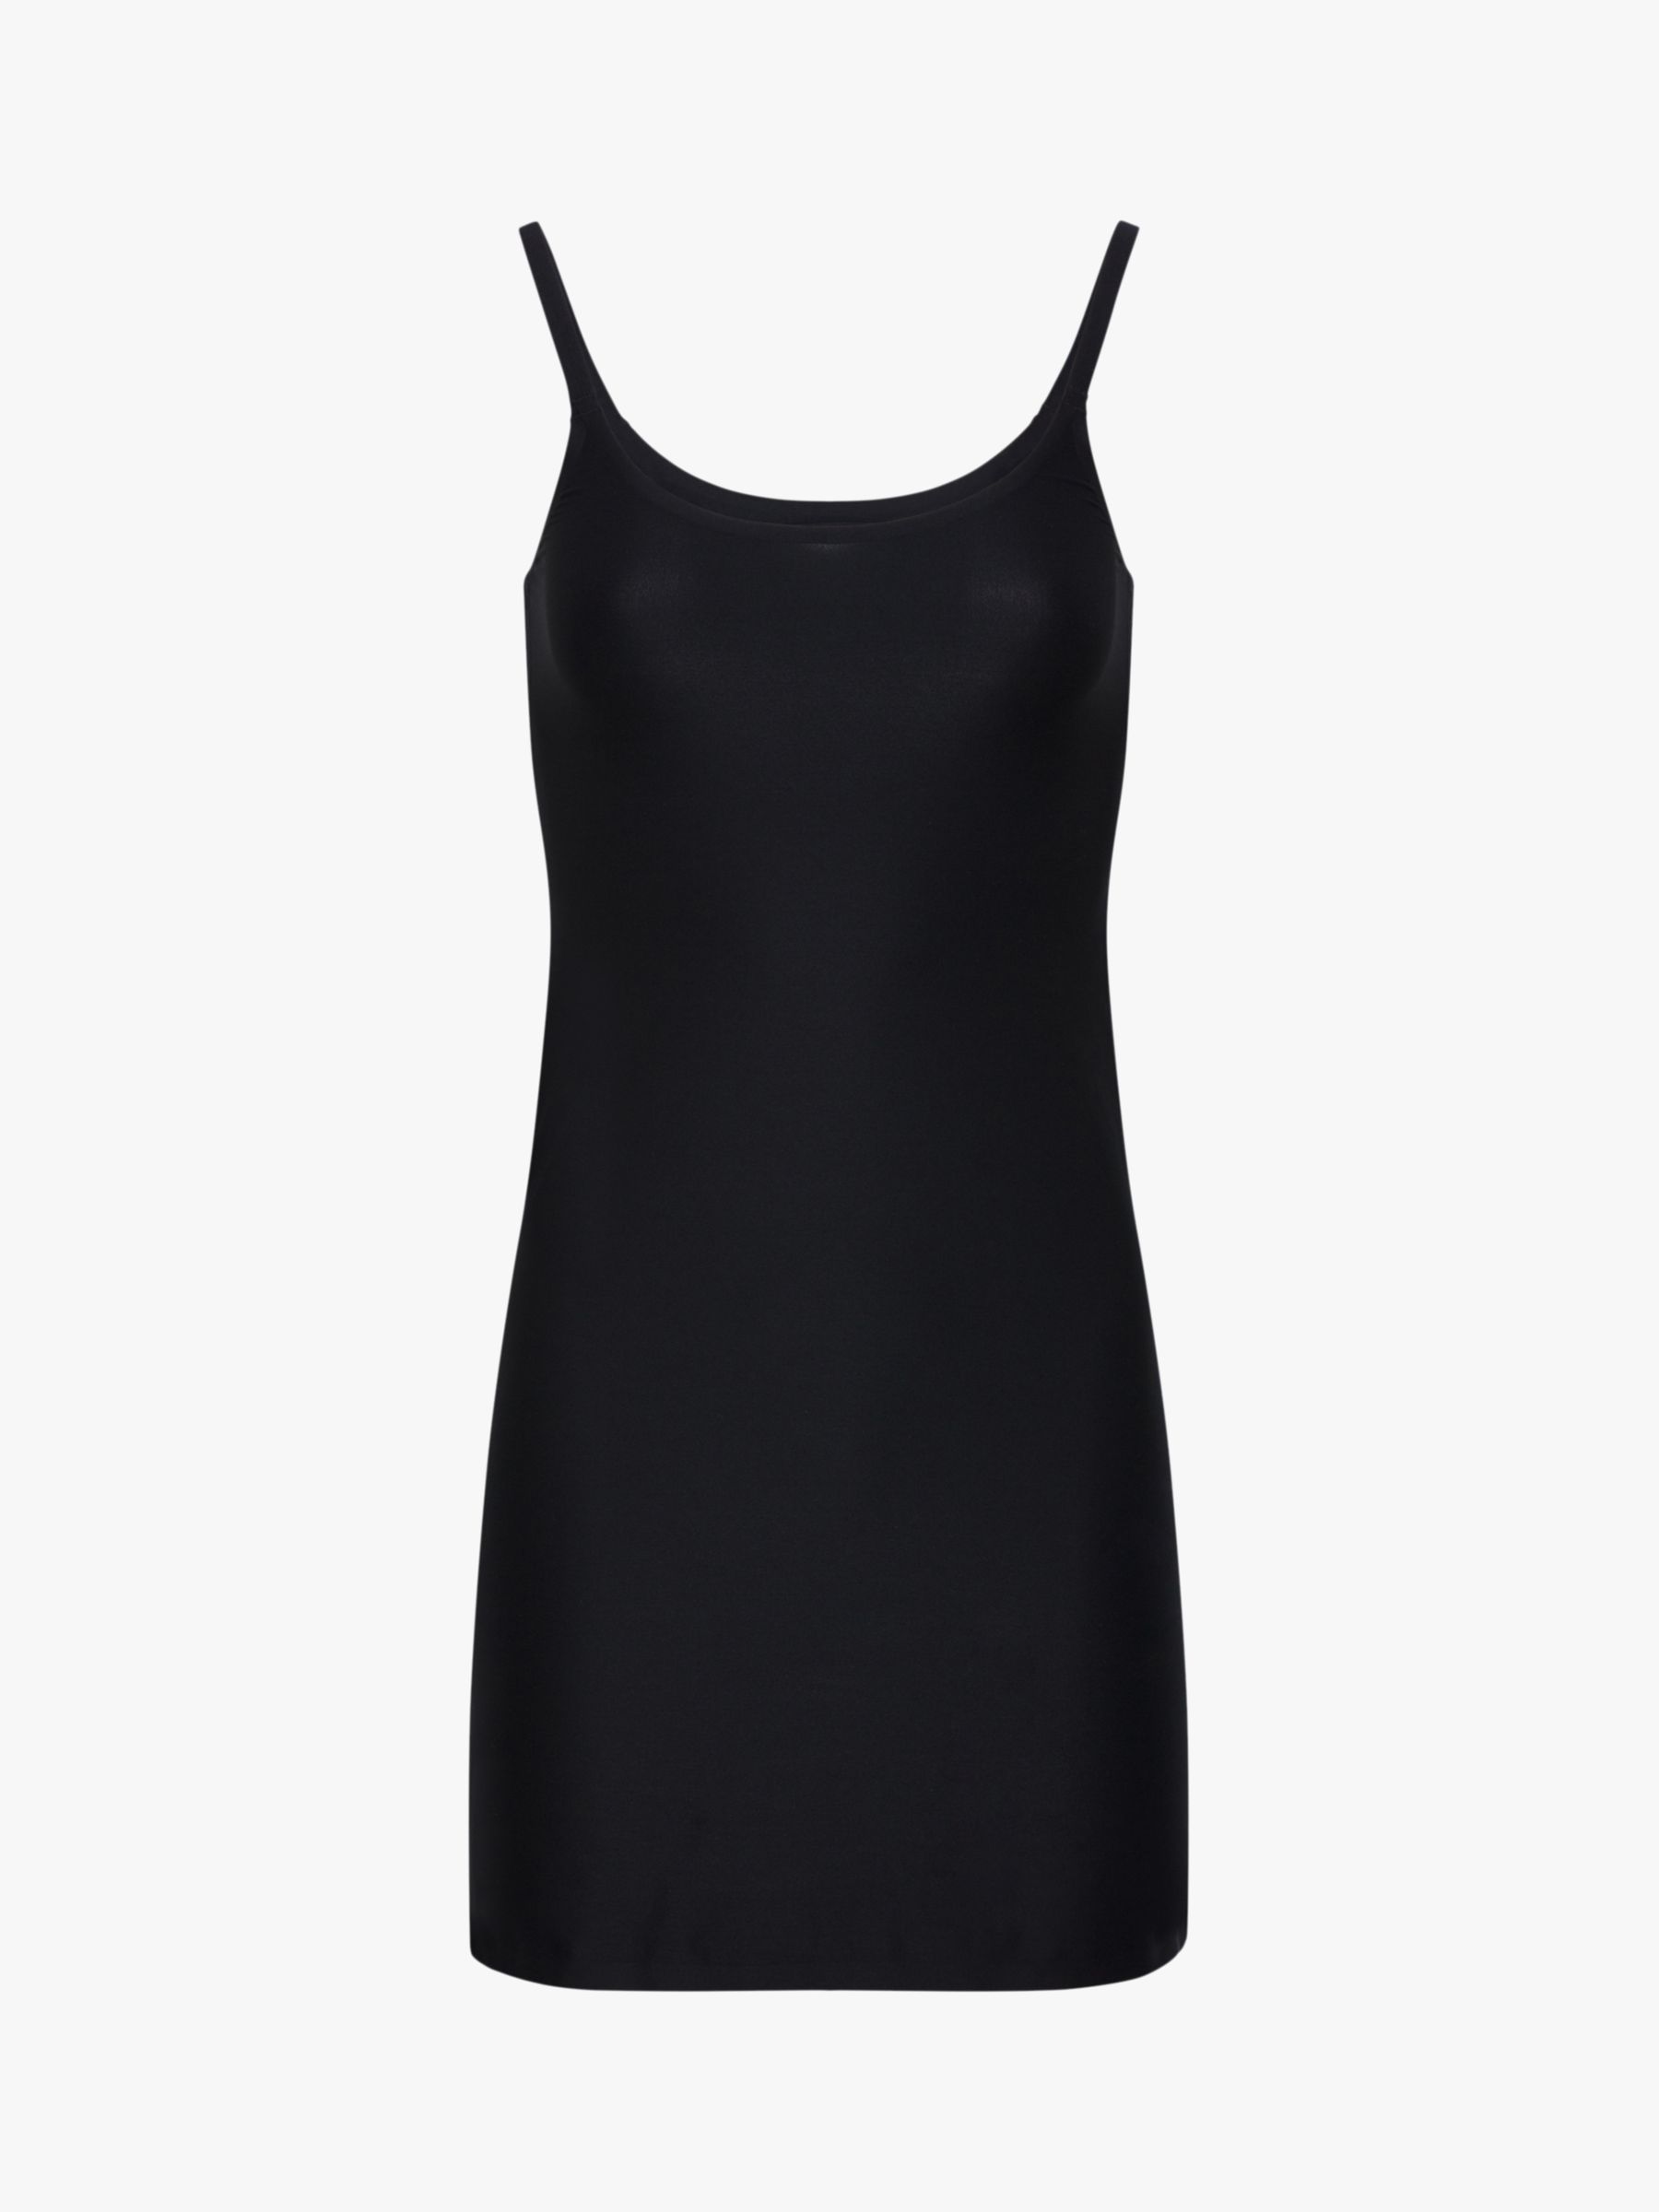 Chantelle Soft Stretch Cami Vest, Black at John Lewis & Partners